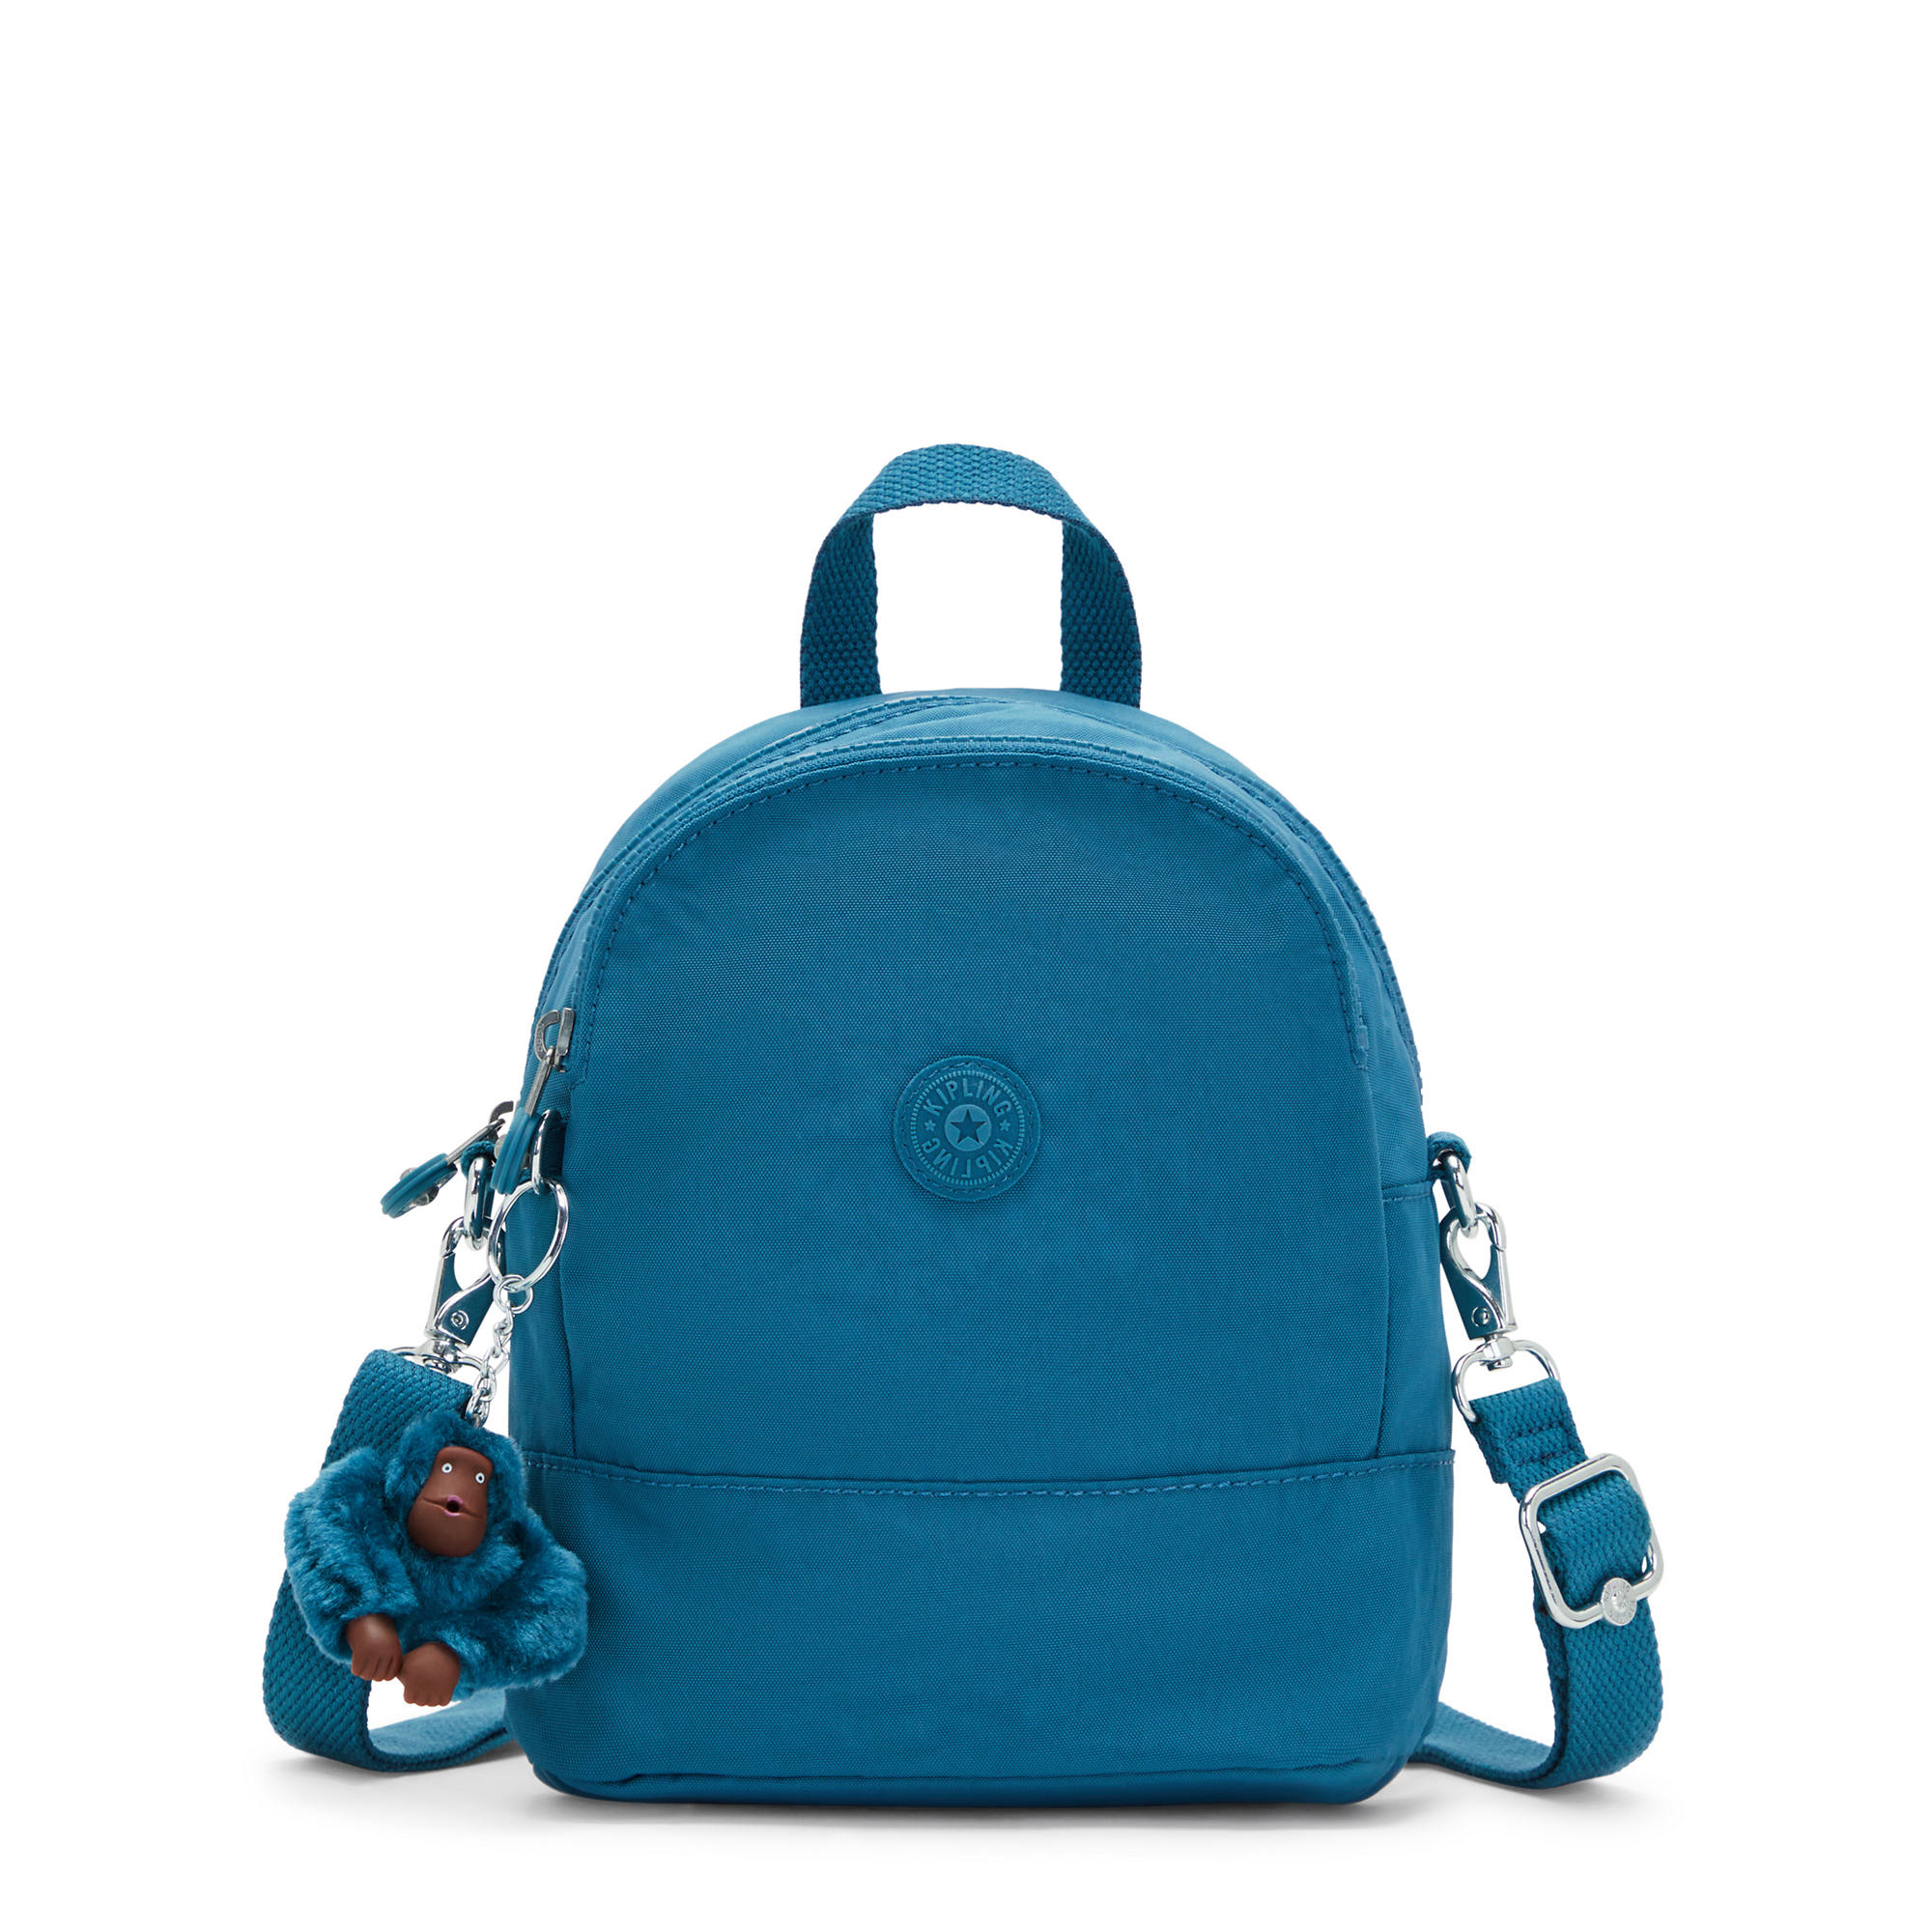 Small Mini 11 inch Fashion Backpack Purse Travel Denim Blue